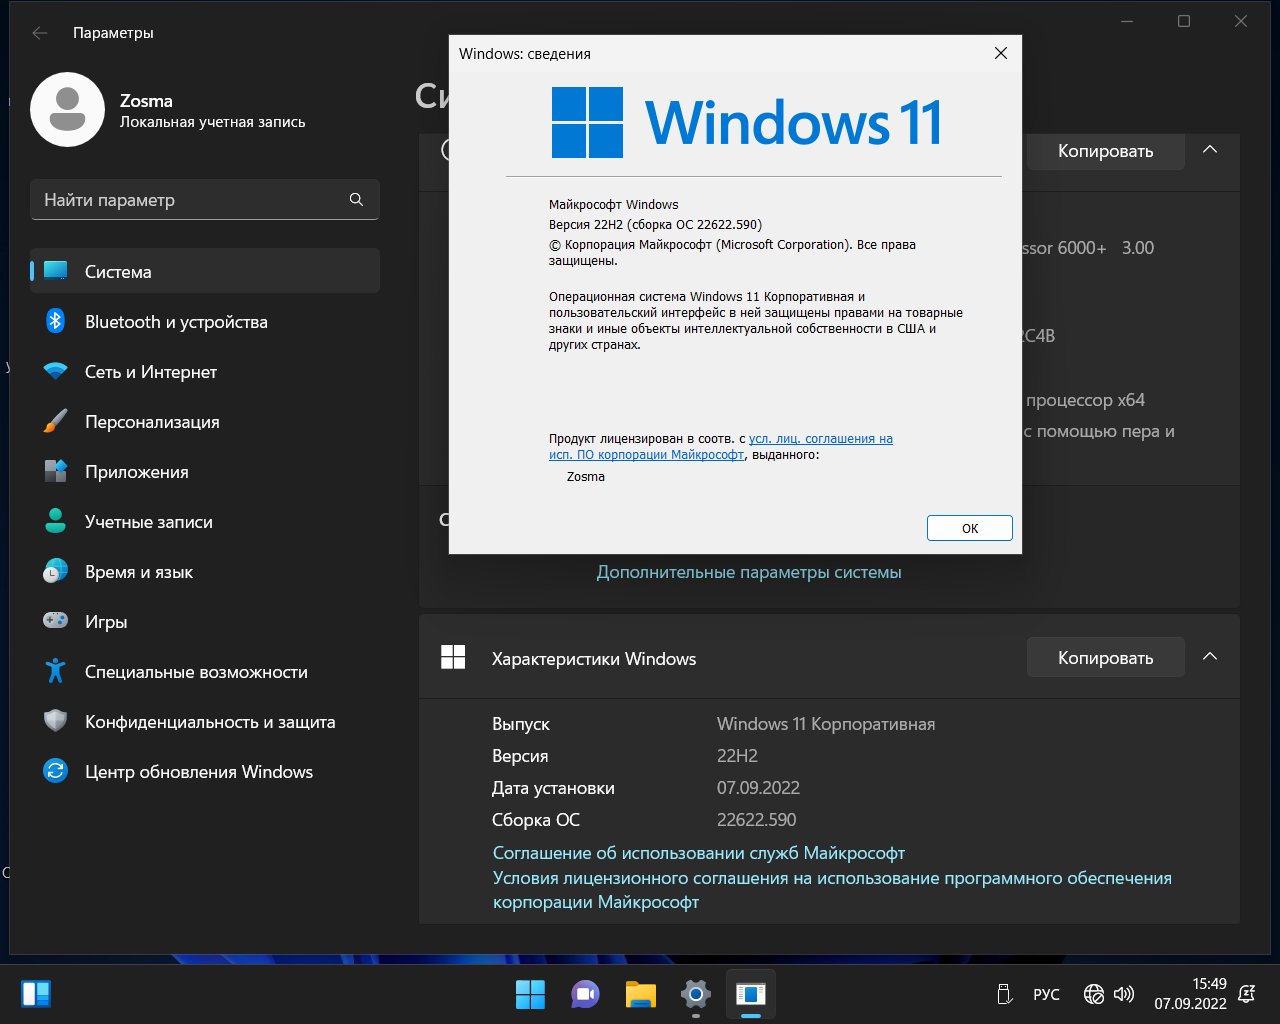 Windows 11 22h2. Windows 11 IOT Enterprise. Windows 11 Enterprise IOT x64 Micro 22h2 build 22598.200 by Zosma коды. Версии виндовс 10. Удаленный рабочий стол программа.